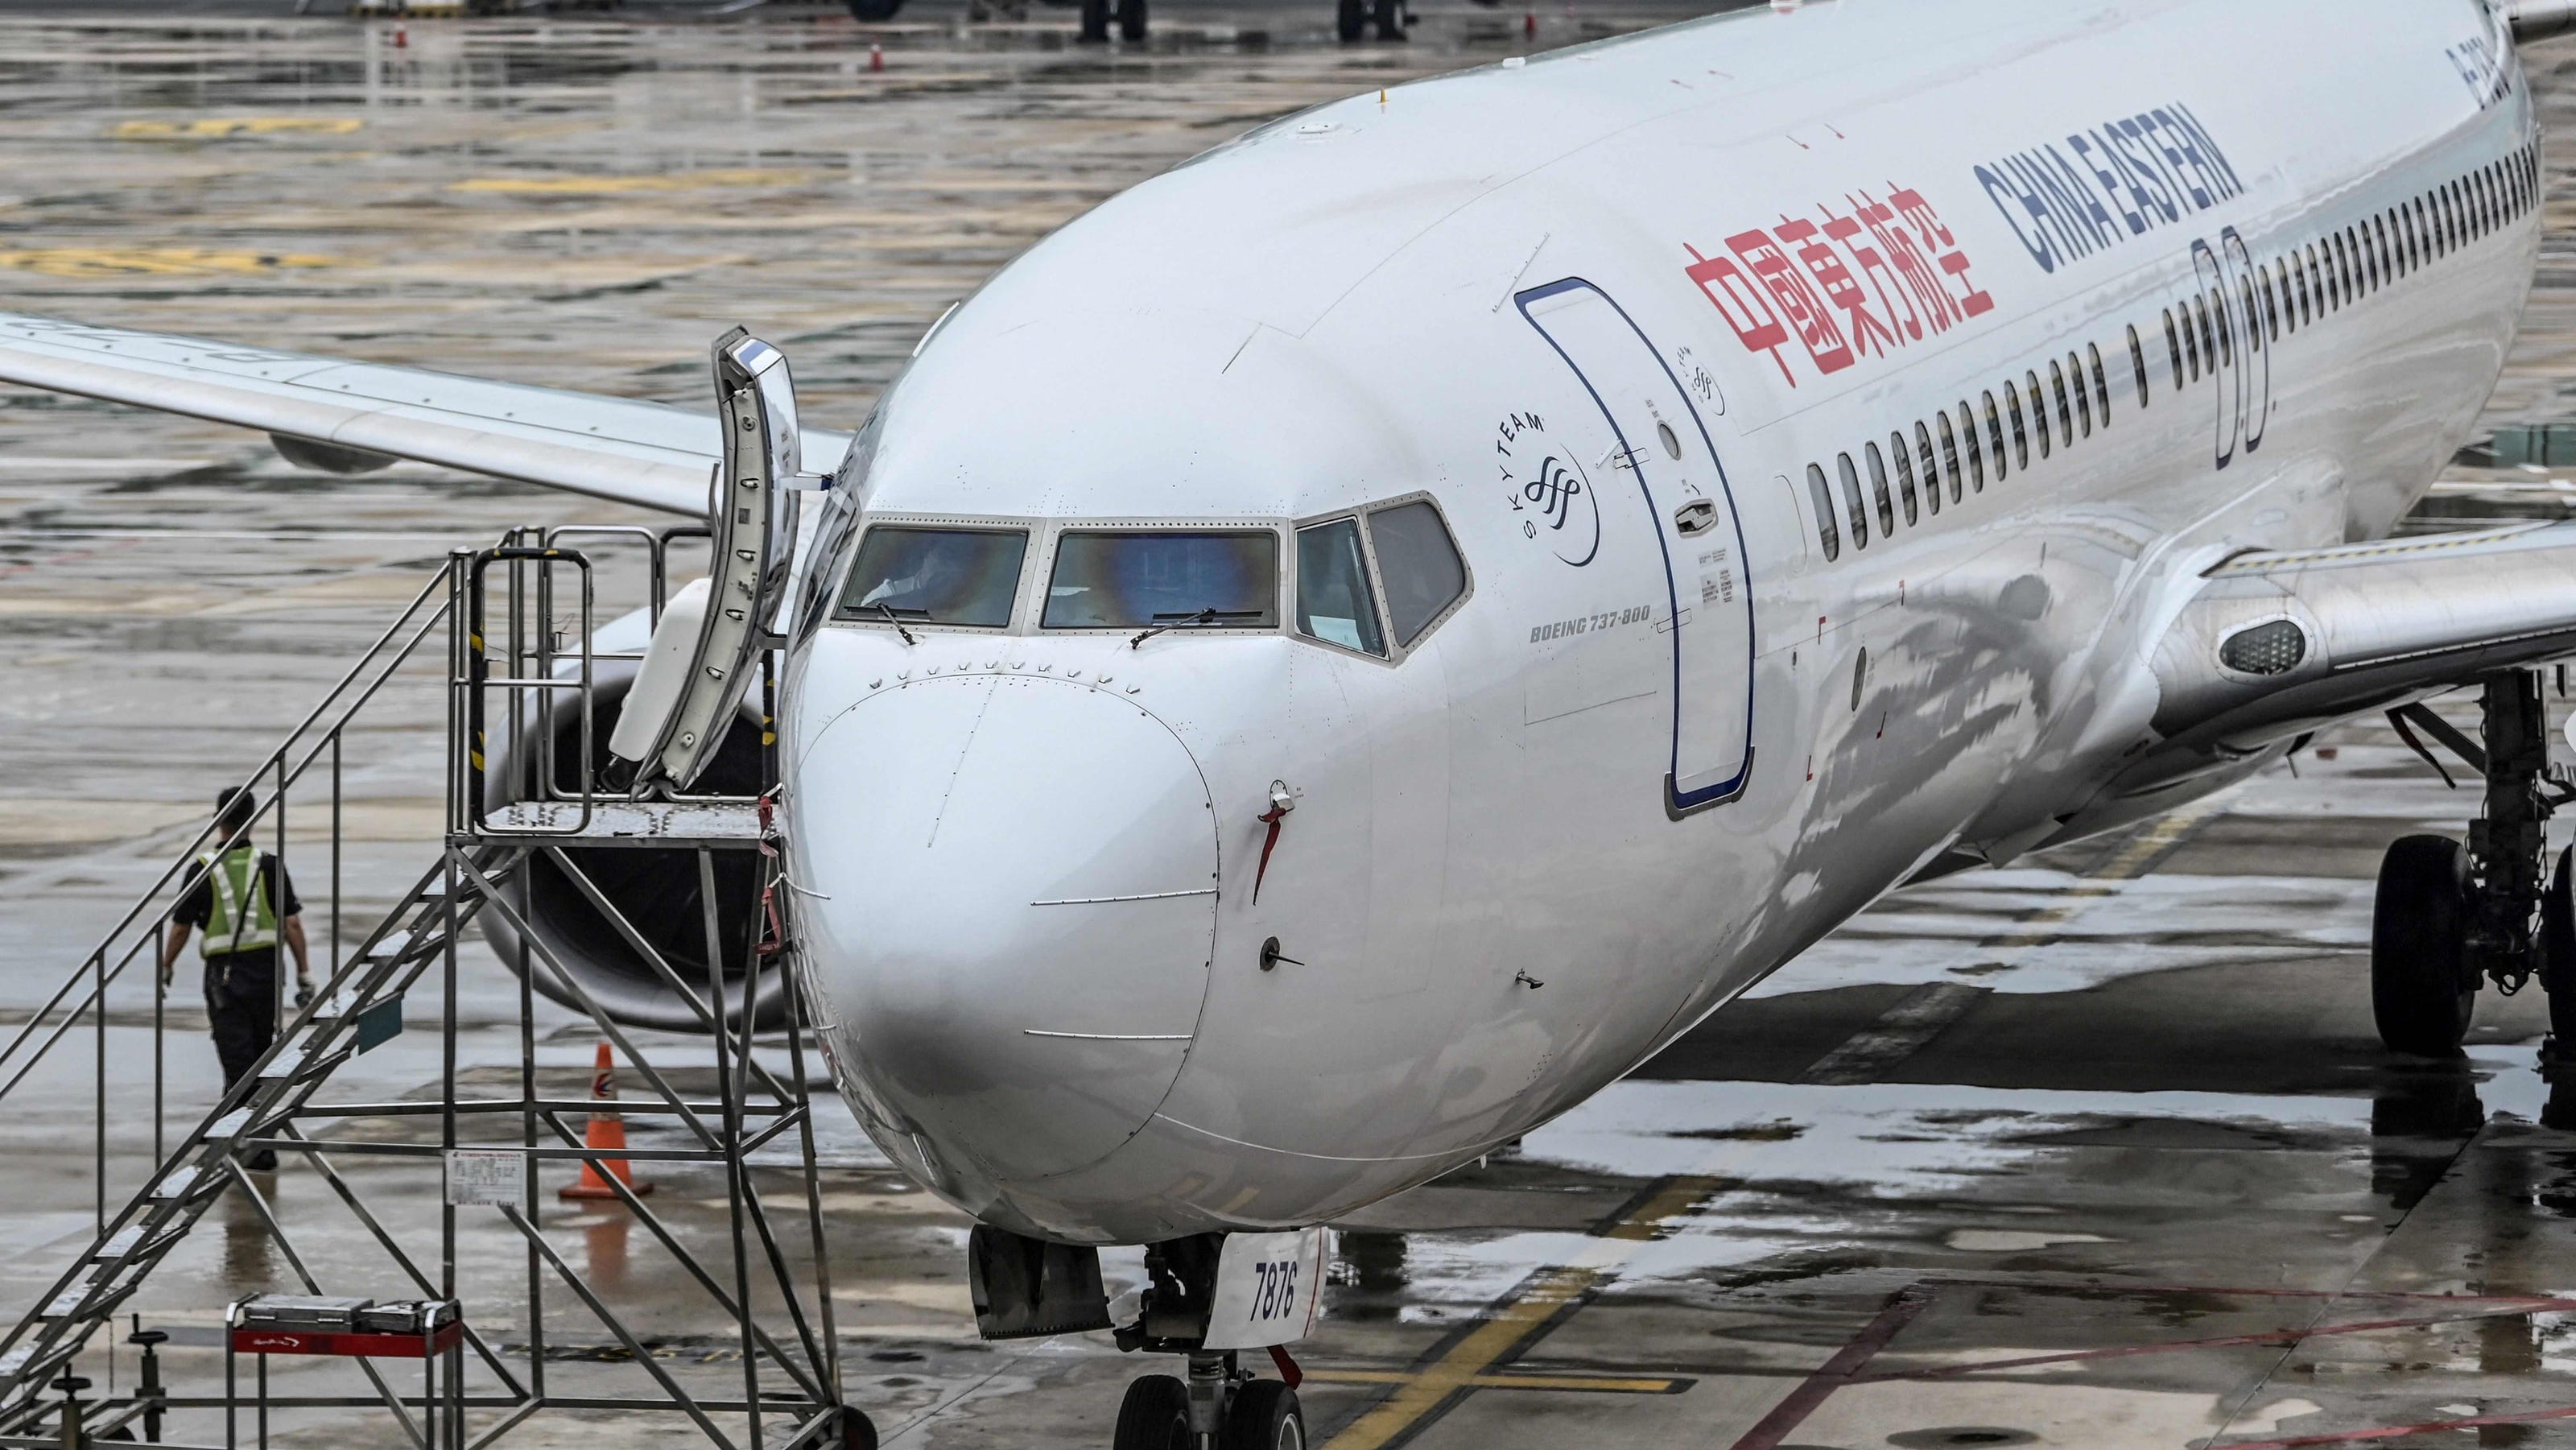 vinder trimme Ups A Boeing 737 crashed in China. Are Boeing planes safe?